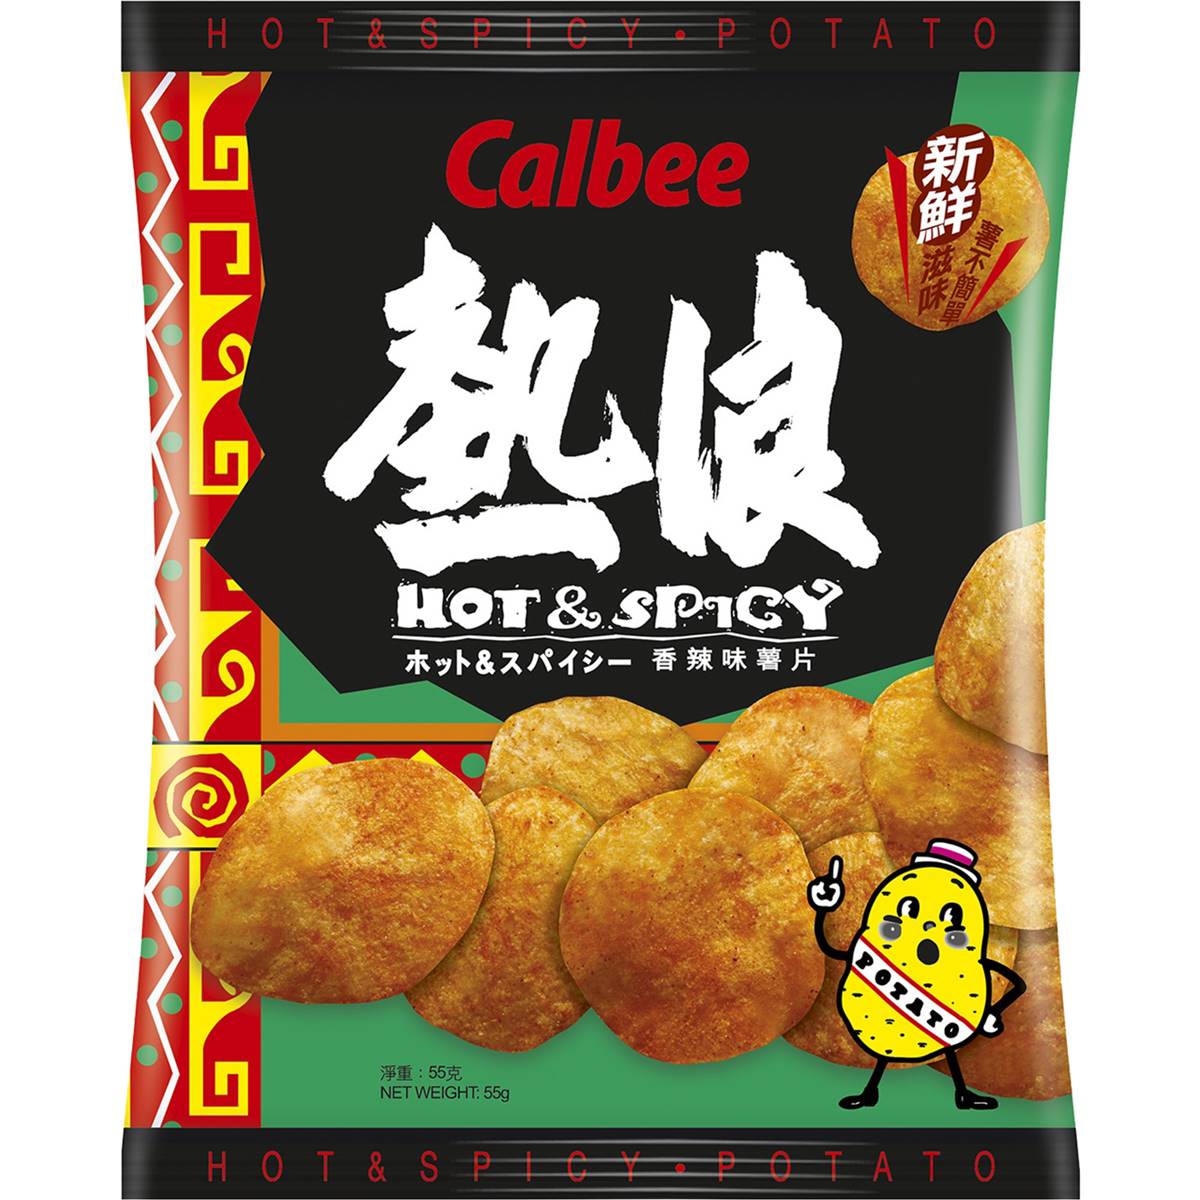 Calories in Calbee Potato Chips Hot & Spicy